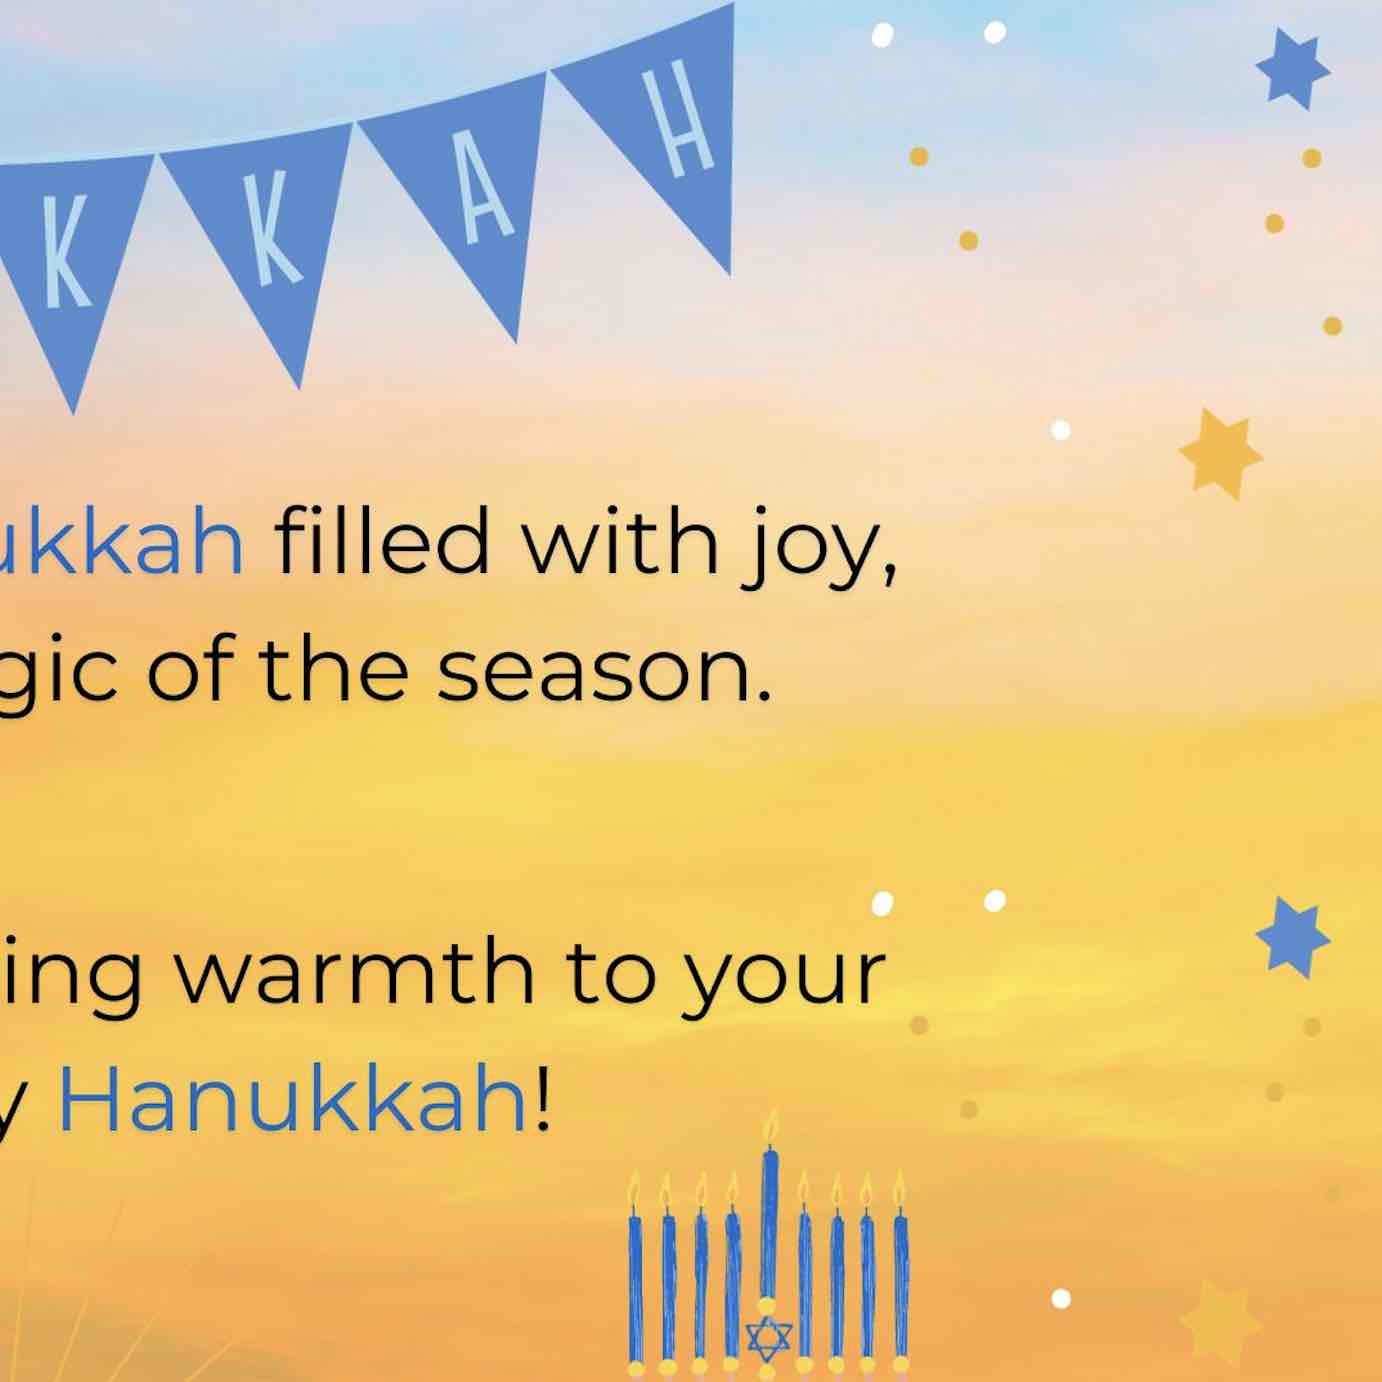 Joy and Light (Hanukkah)